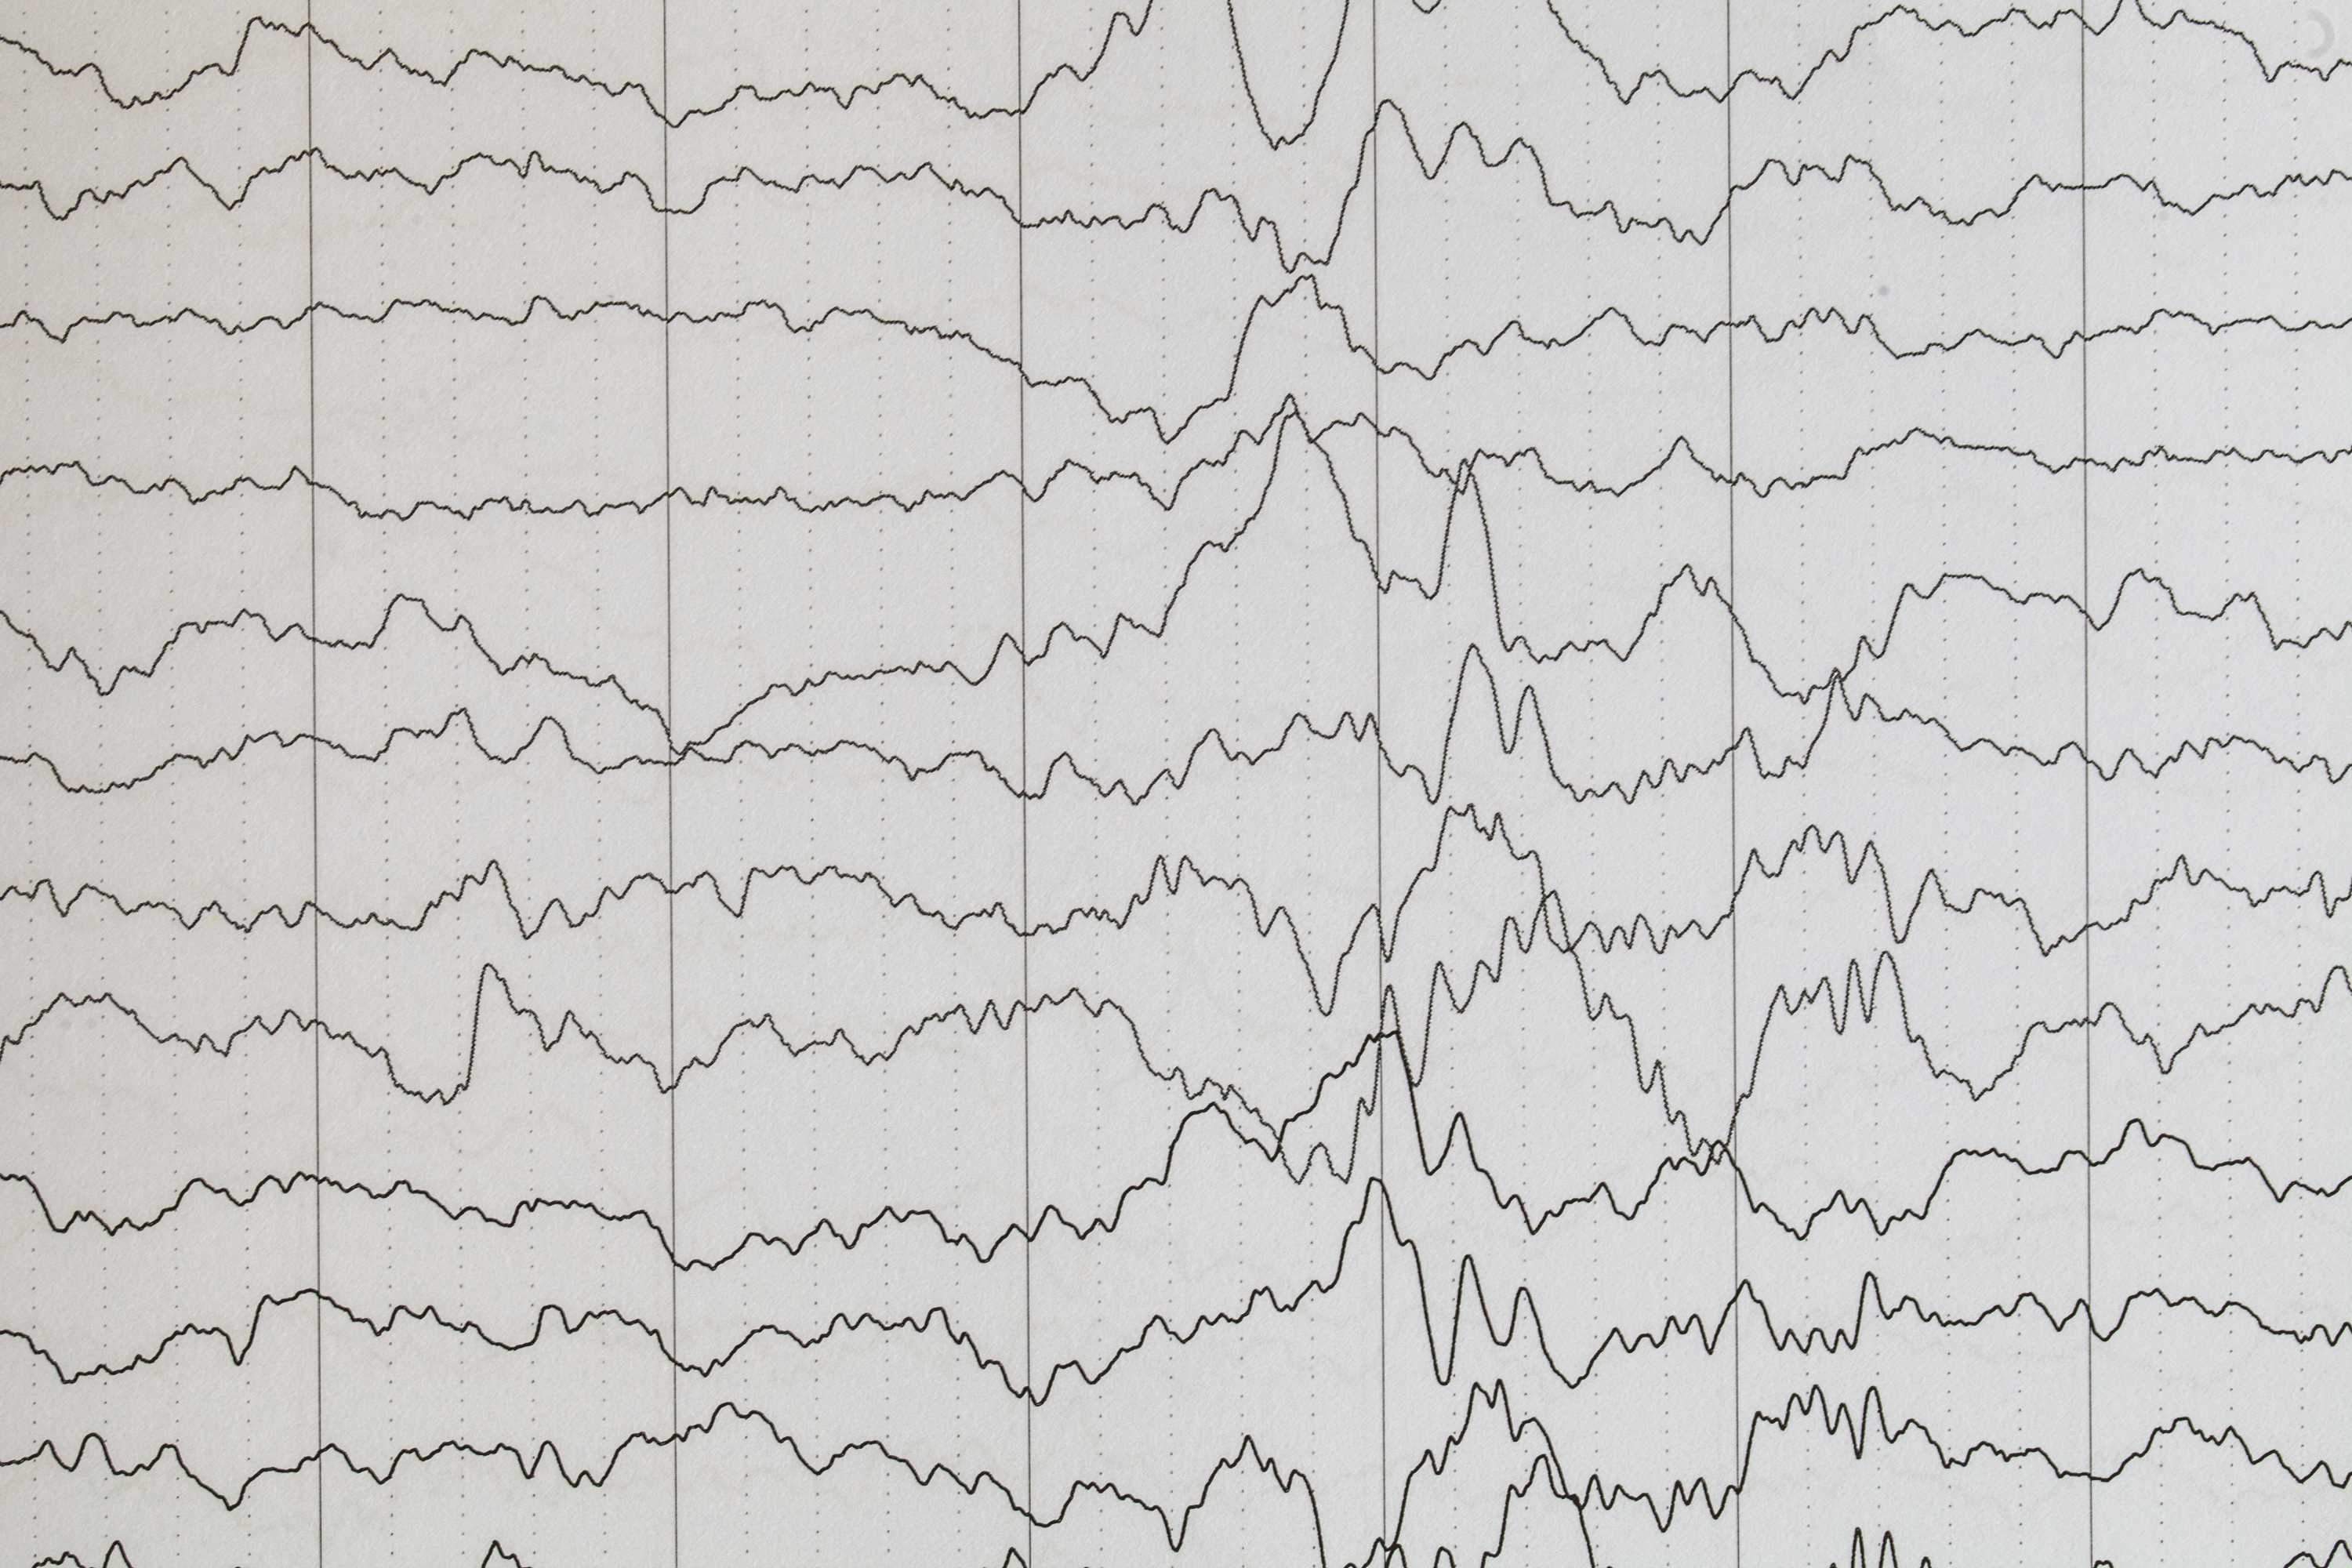 7.0 The sound of seizure